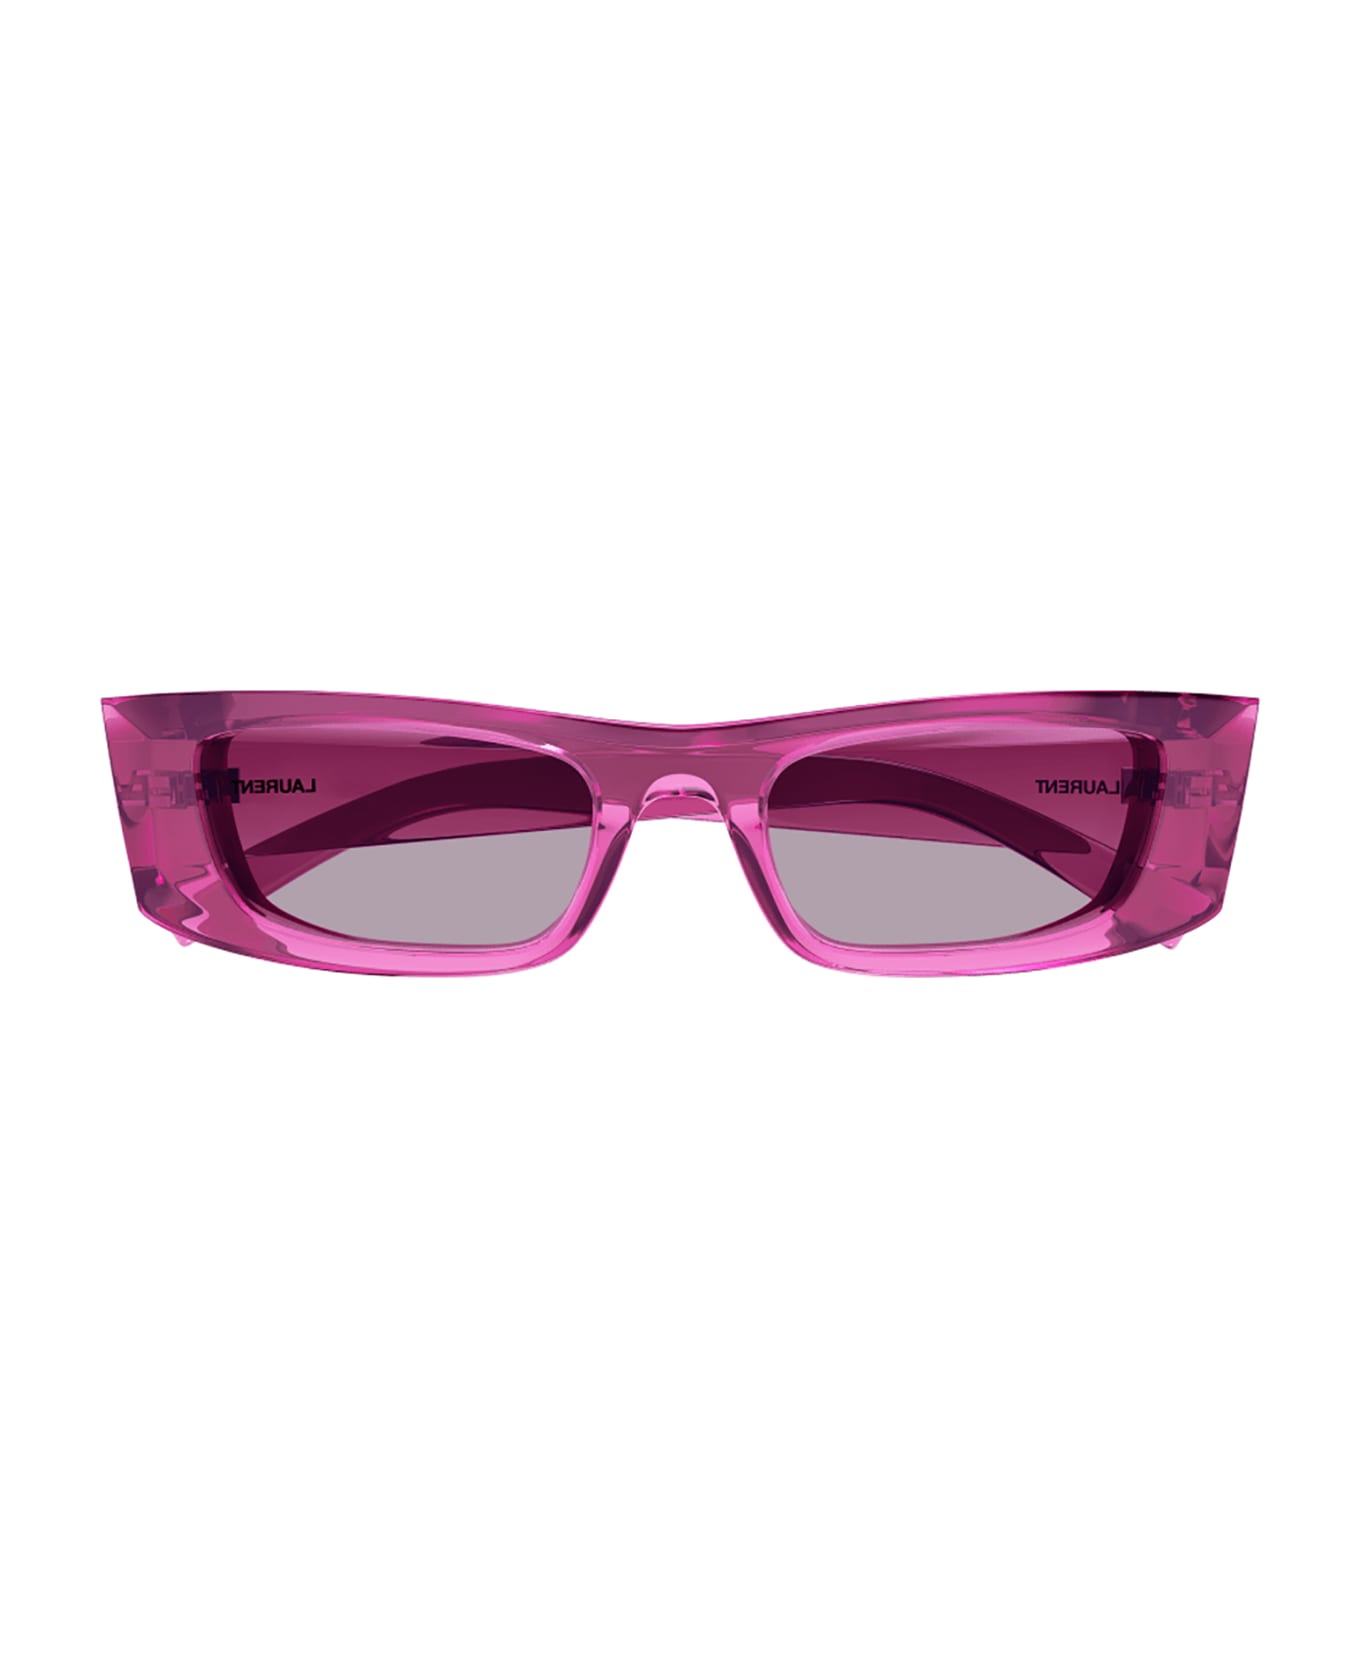 Saint Laurent Eyewear Sl 553 Sunglasses - 003 pink pink violet